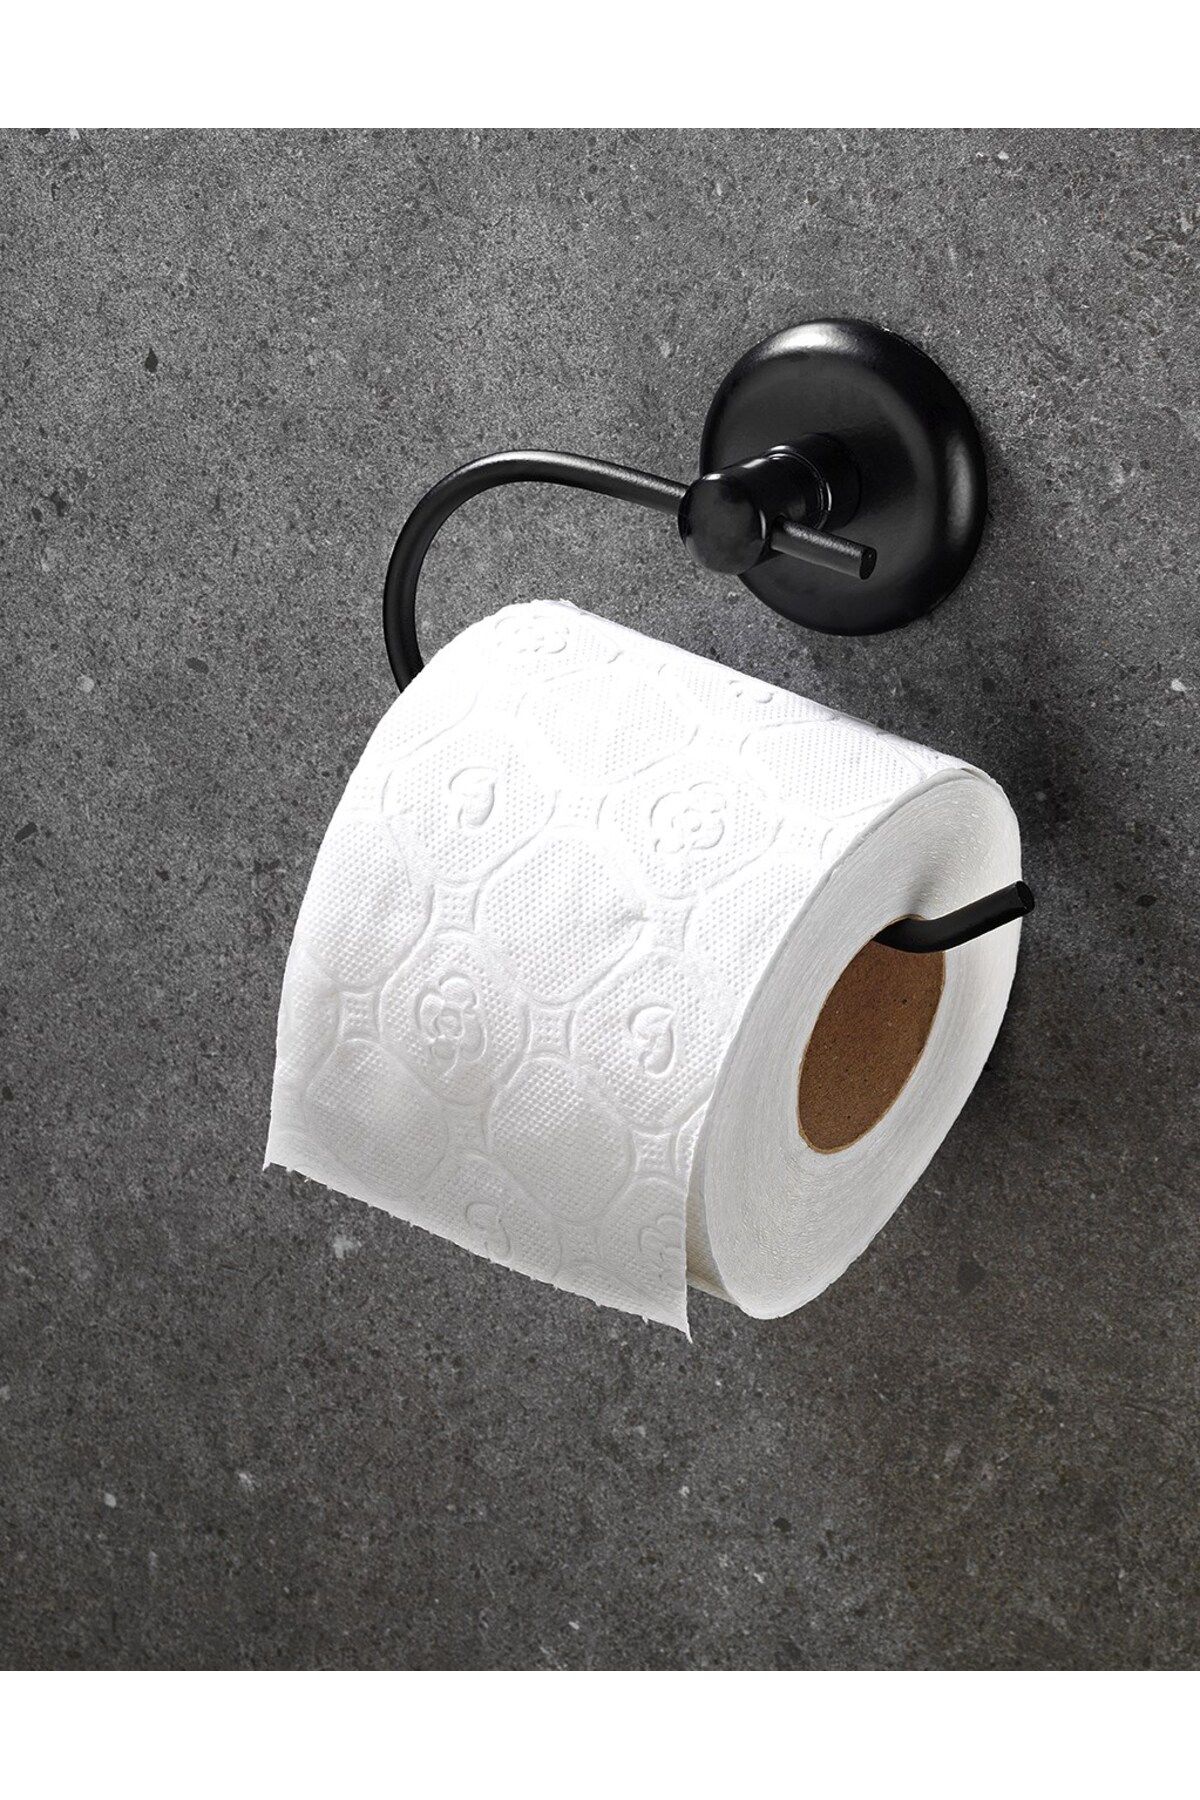 Sas Haus Yapışkanlı Tuvalet Kağıtlığı Wc Kağıtlık Tuvalet Kağıdı Askısı Siyah